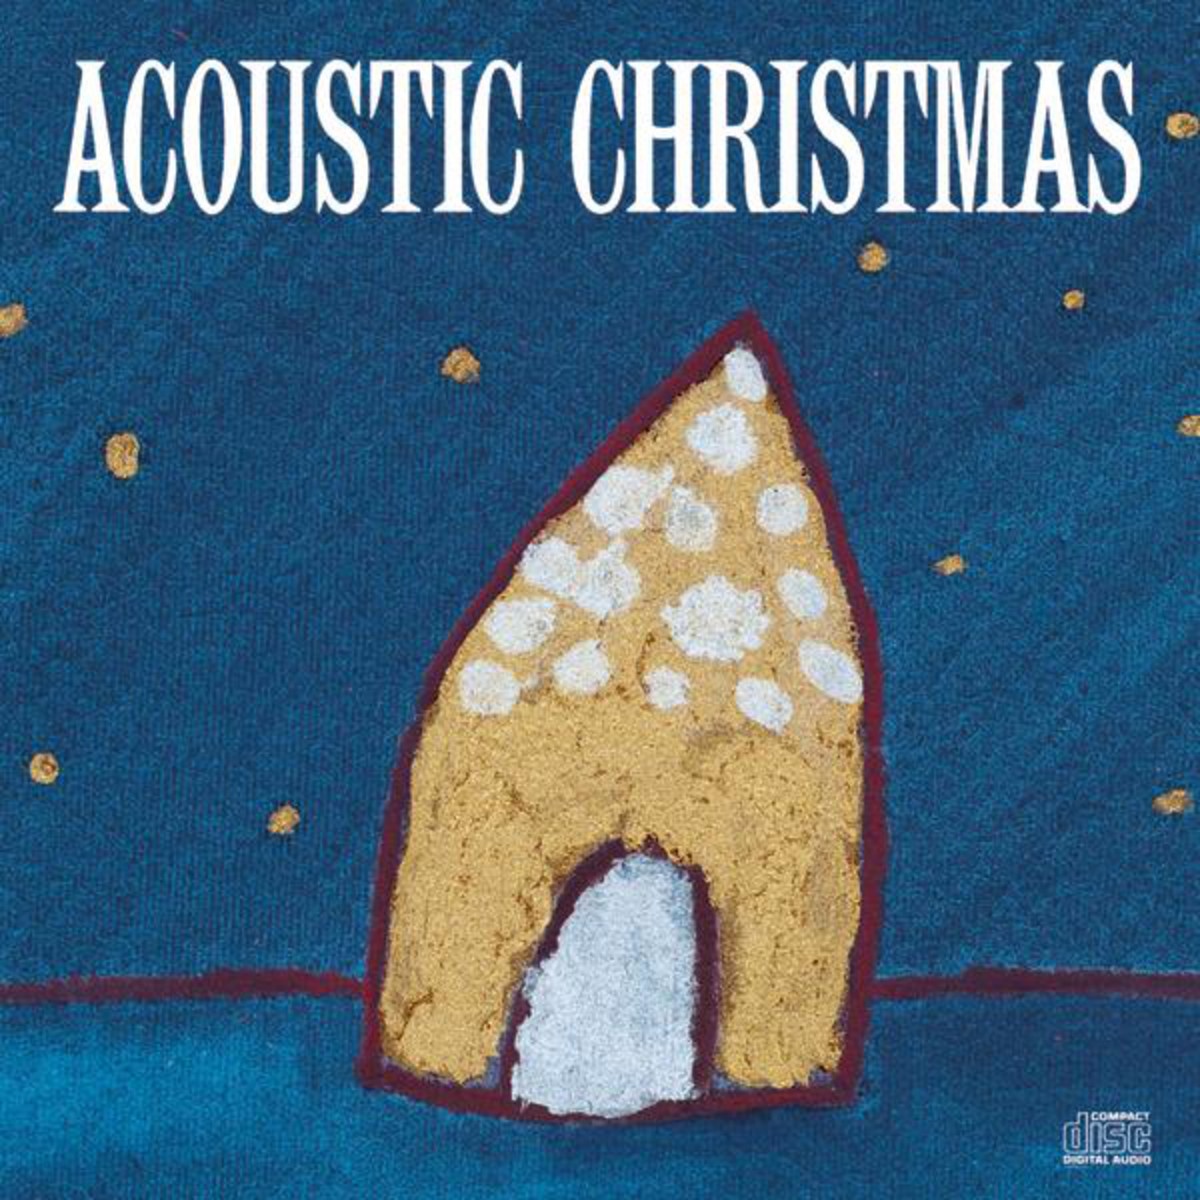 Away In A Manger (Acoustic Christmas Album Version) - unplug